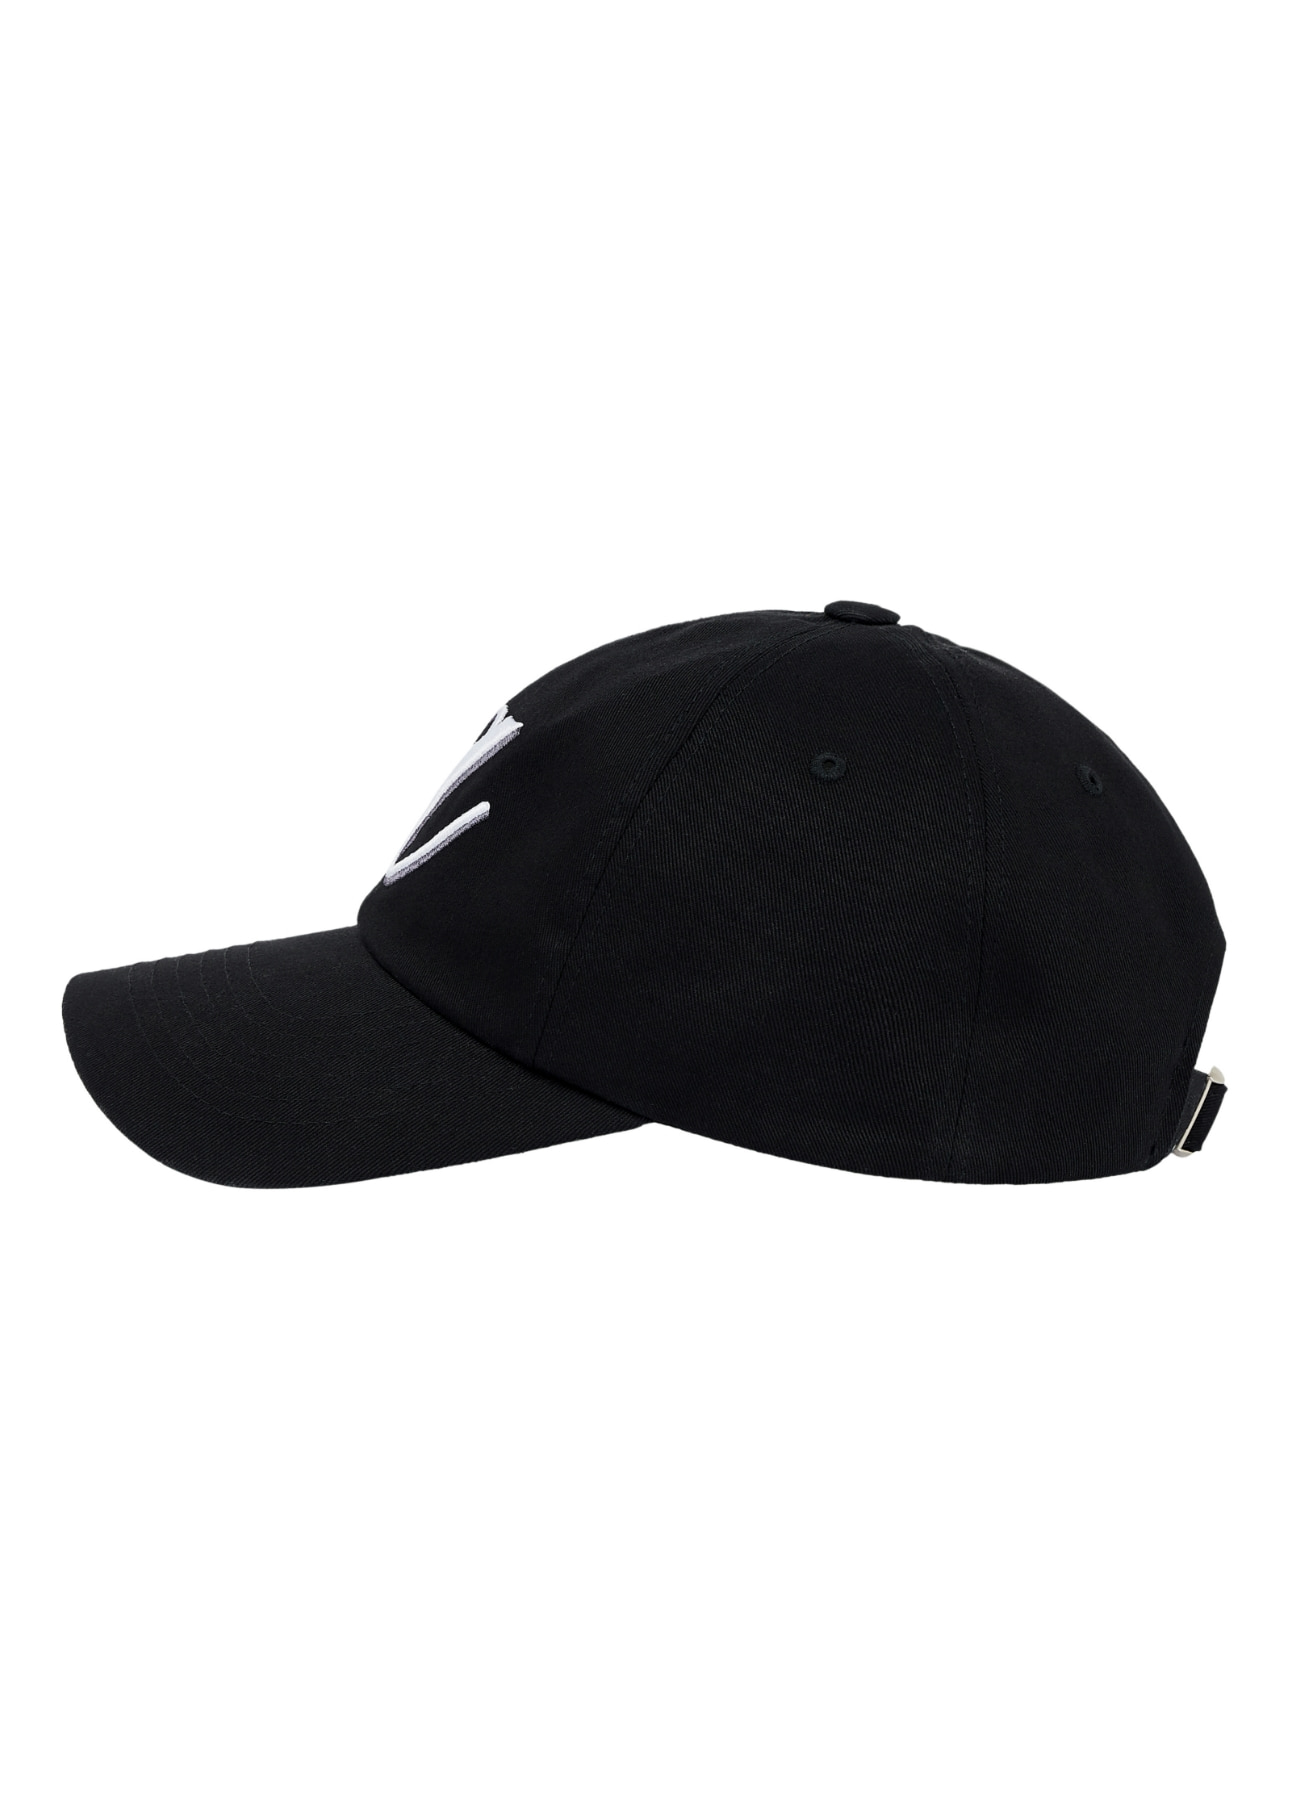 A LOGO BALL CAP BLACK